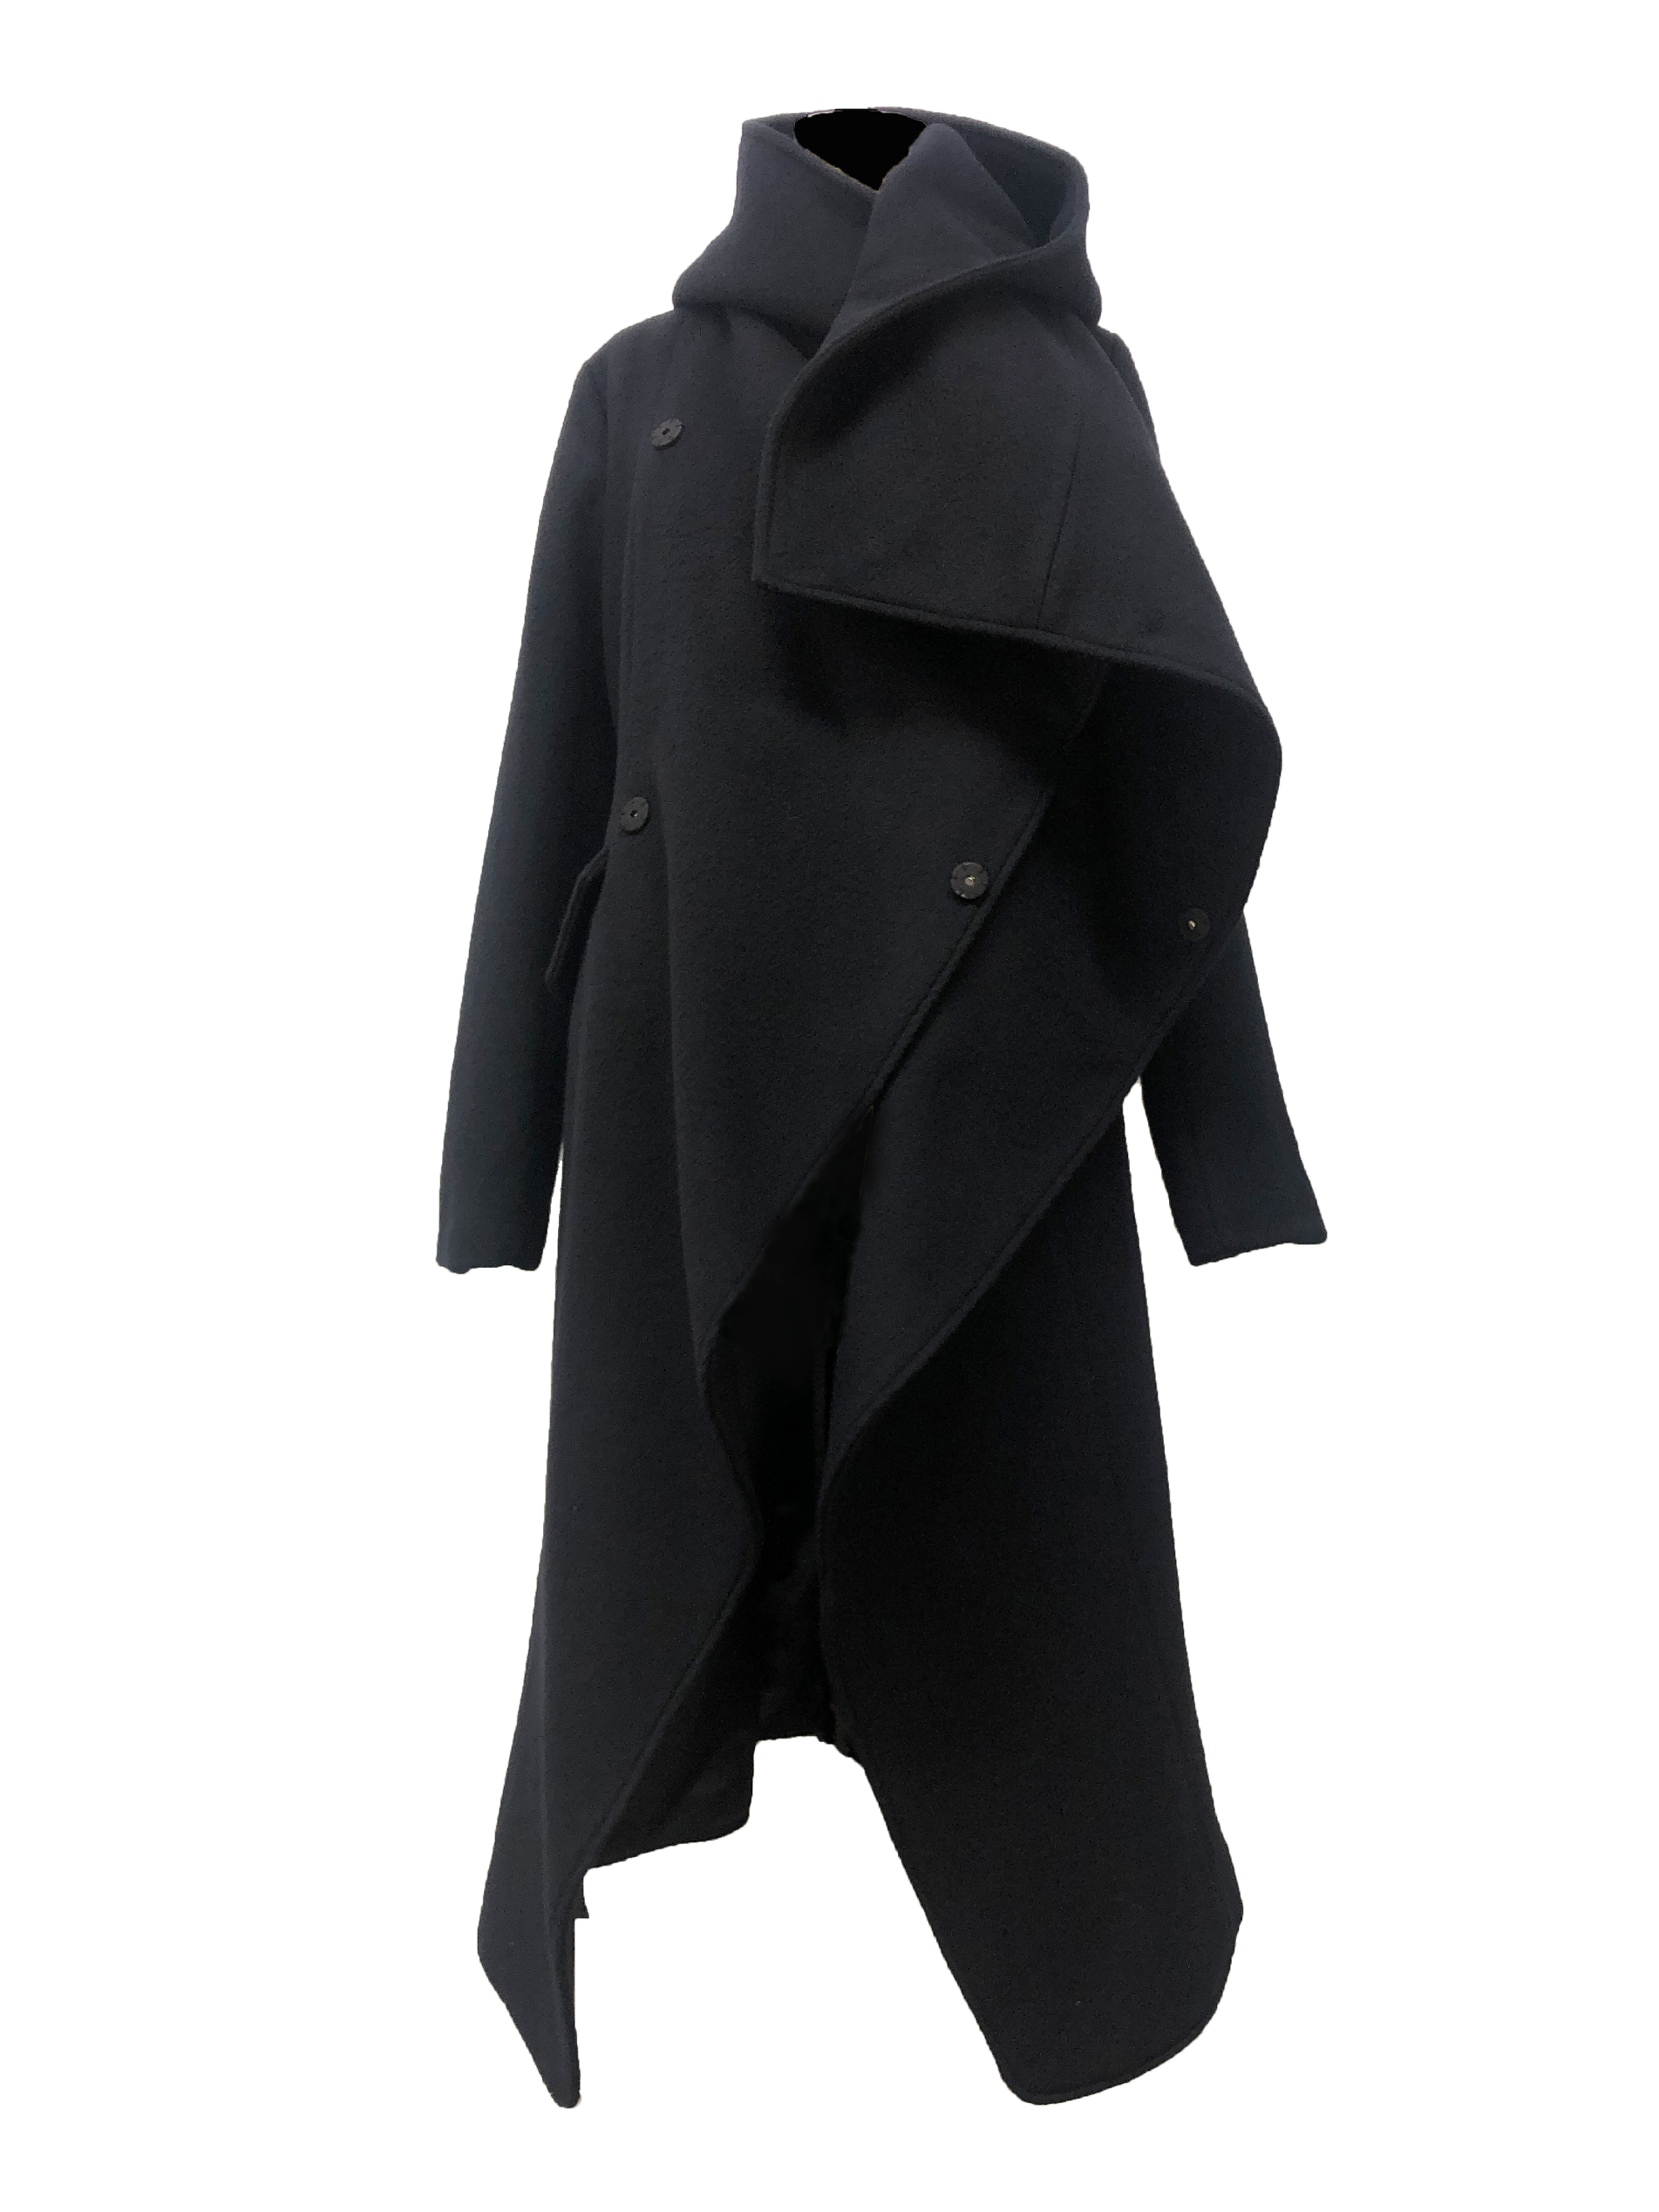 Medium length Black Coat with a hood alongside metal clip closures